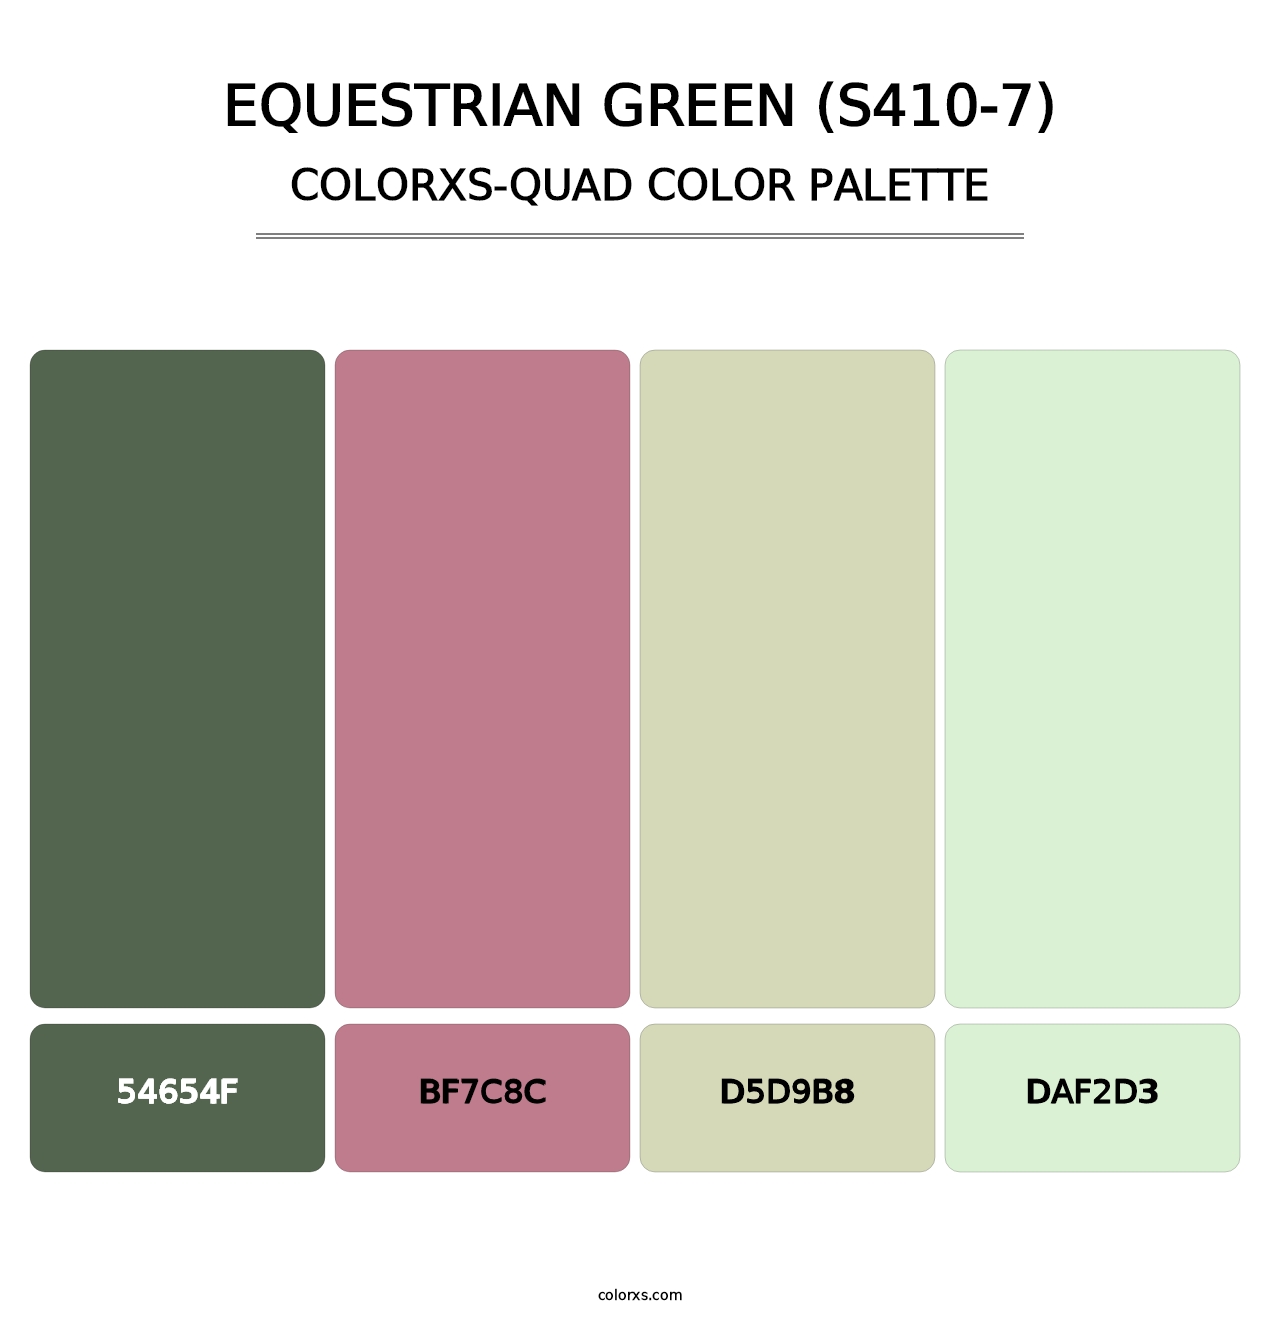 Equestrian Green (S410-7) - Colorxs Quad Palette